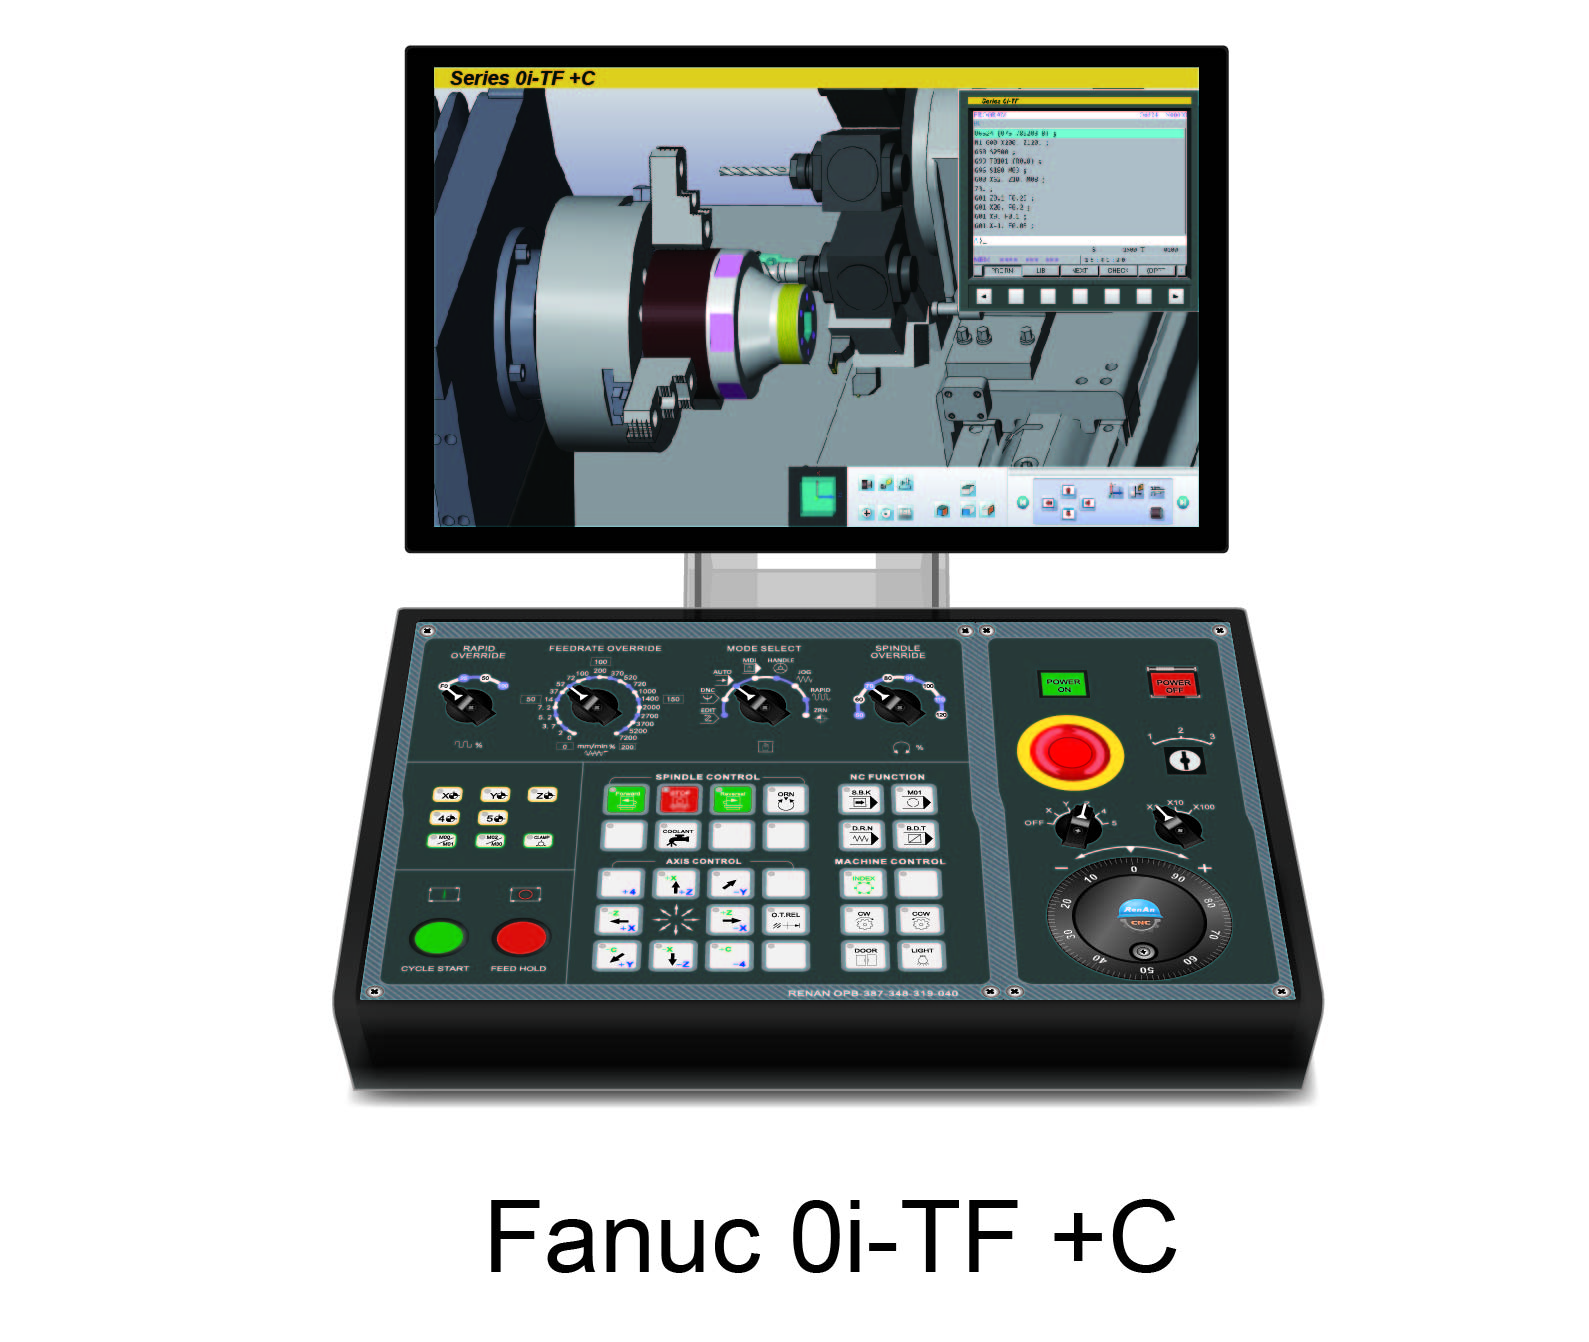 cnc fanuc simulator free full version download